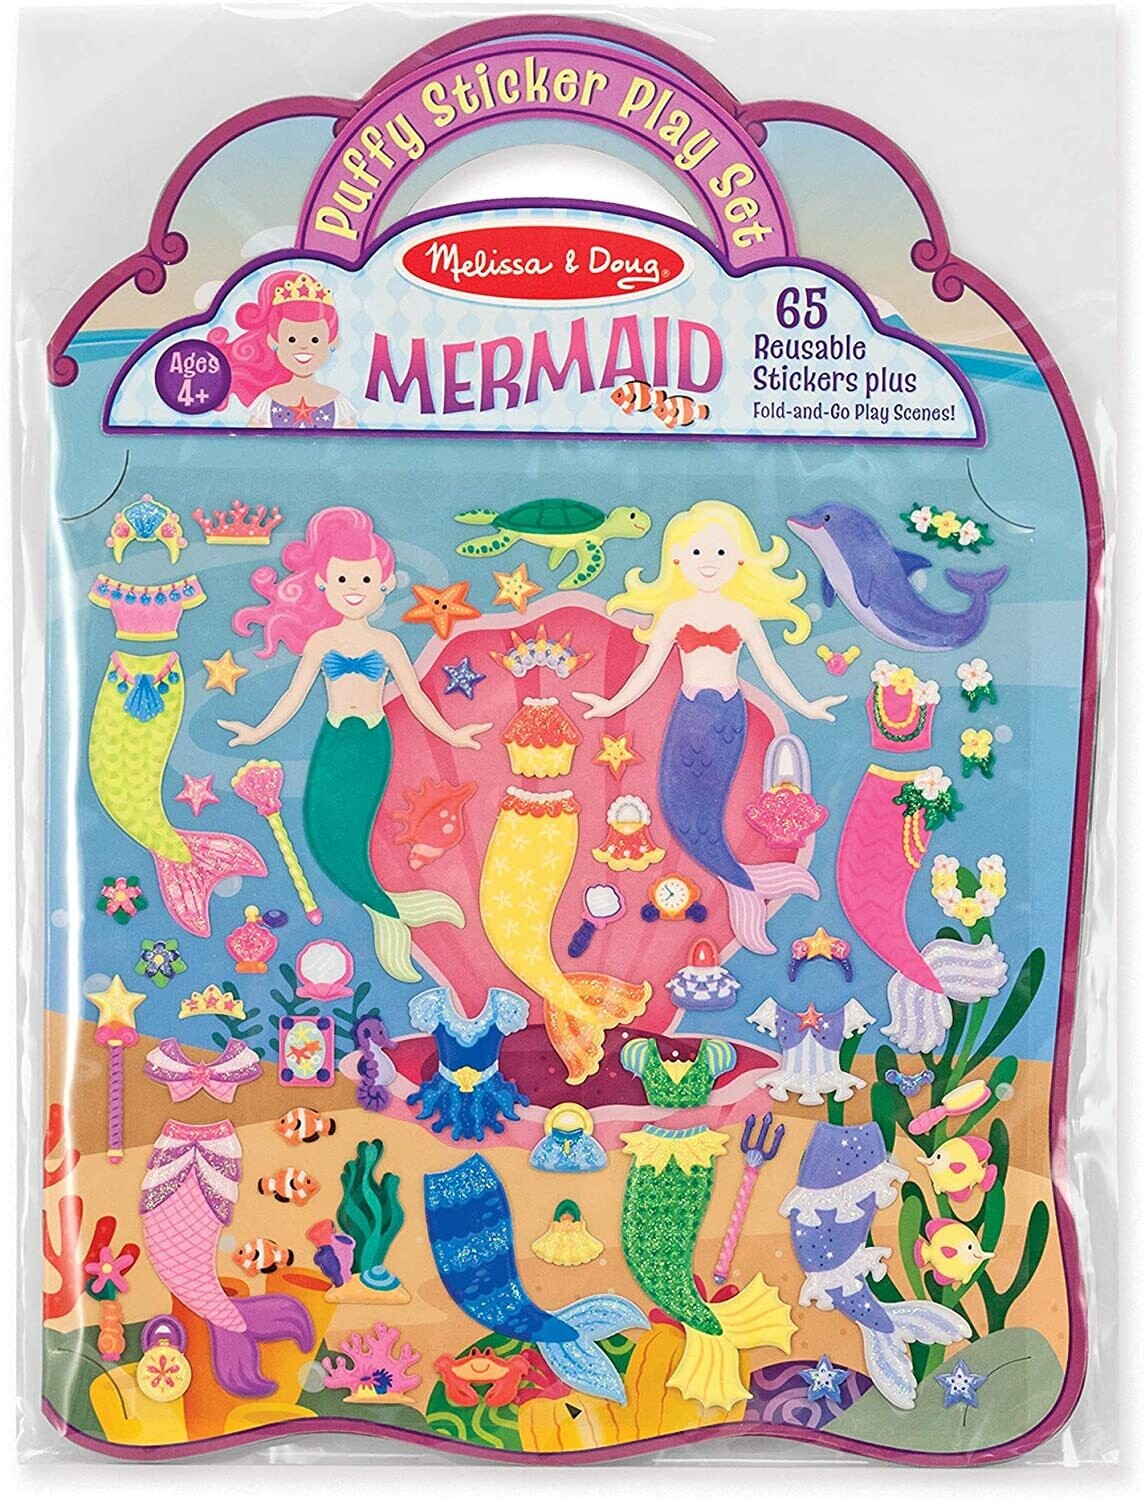 MD Puffy Sticker Play Set Mermaid